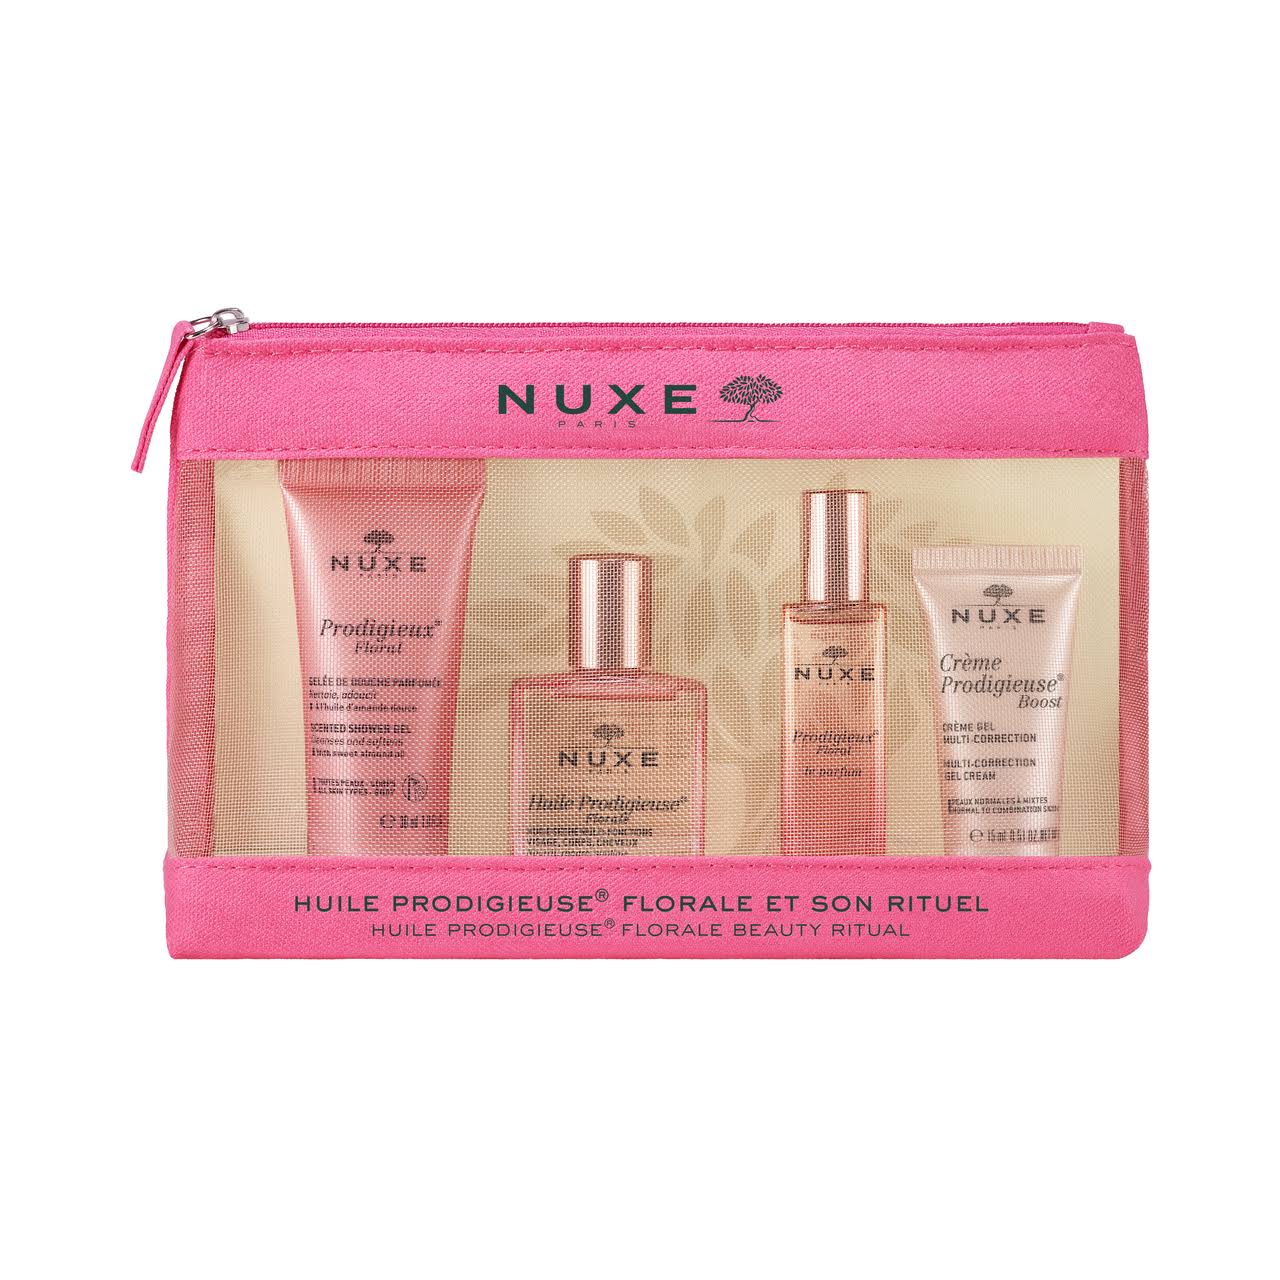 Nuxe | Prodigieux Floral Travel Kit